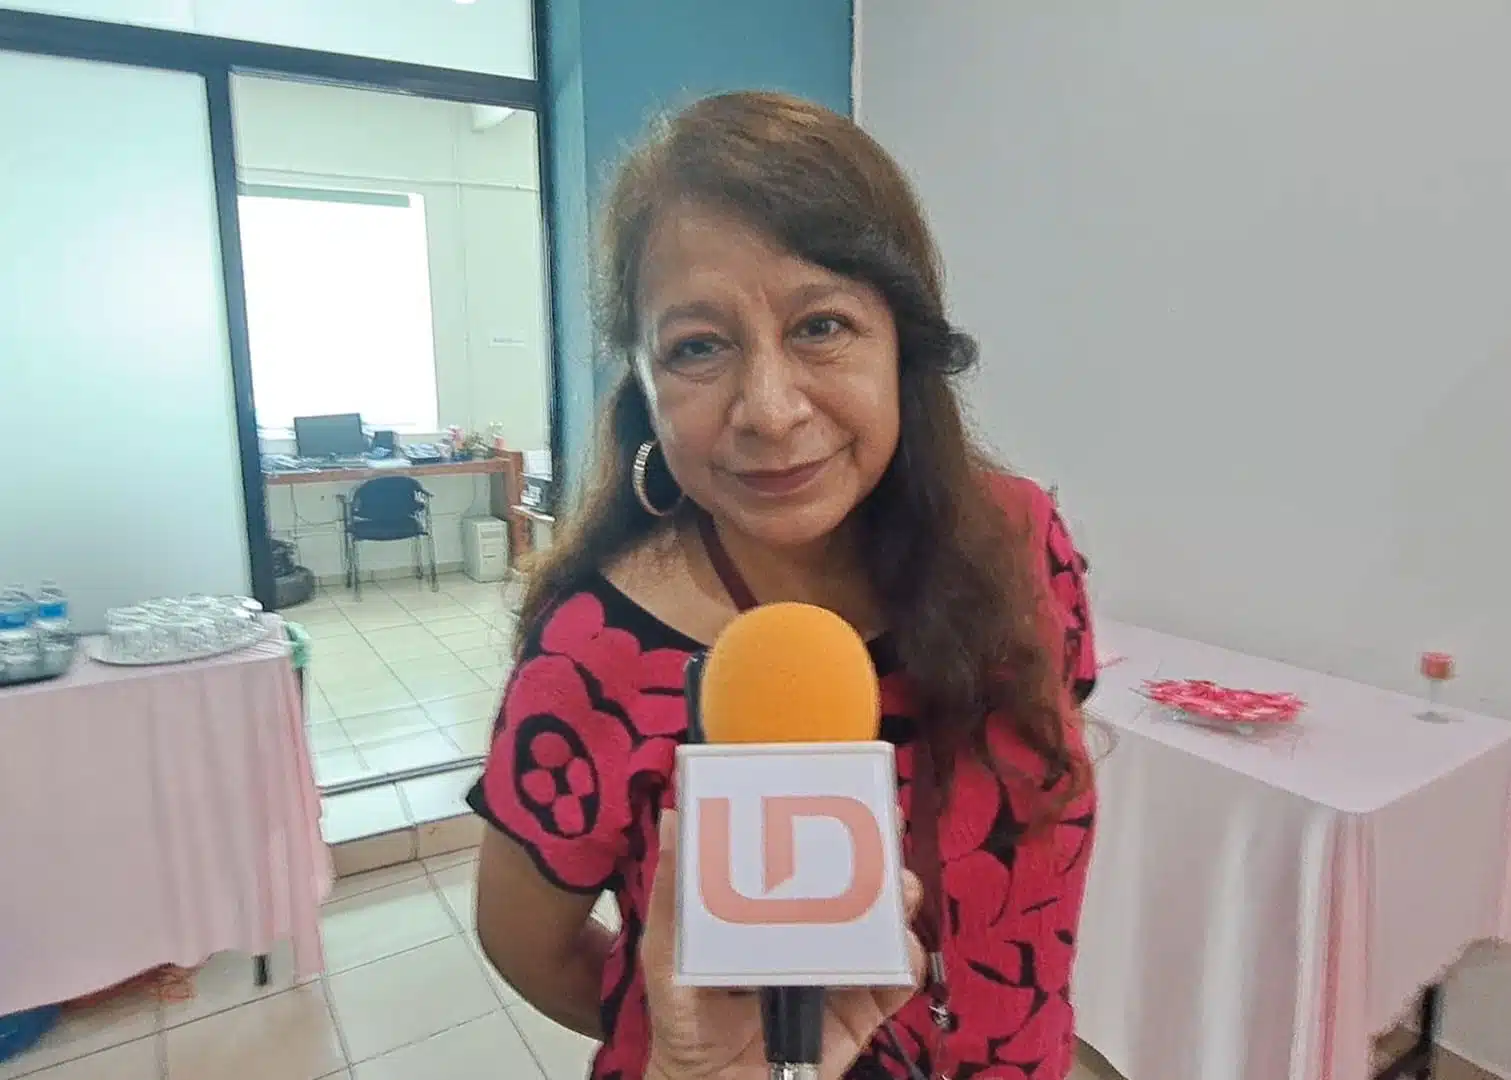 Directora de Immujer, Emma Rodríguez Choreño